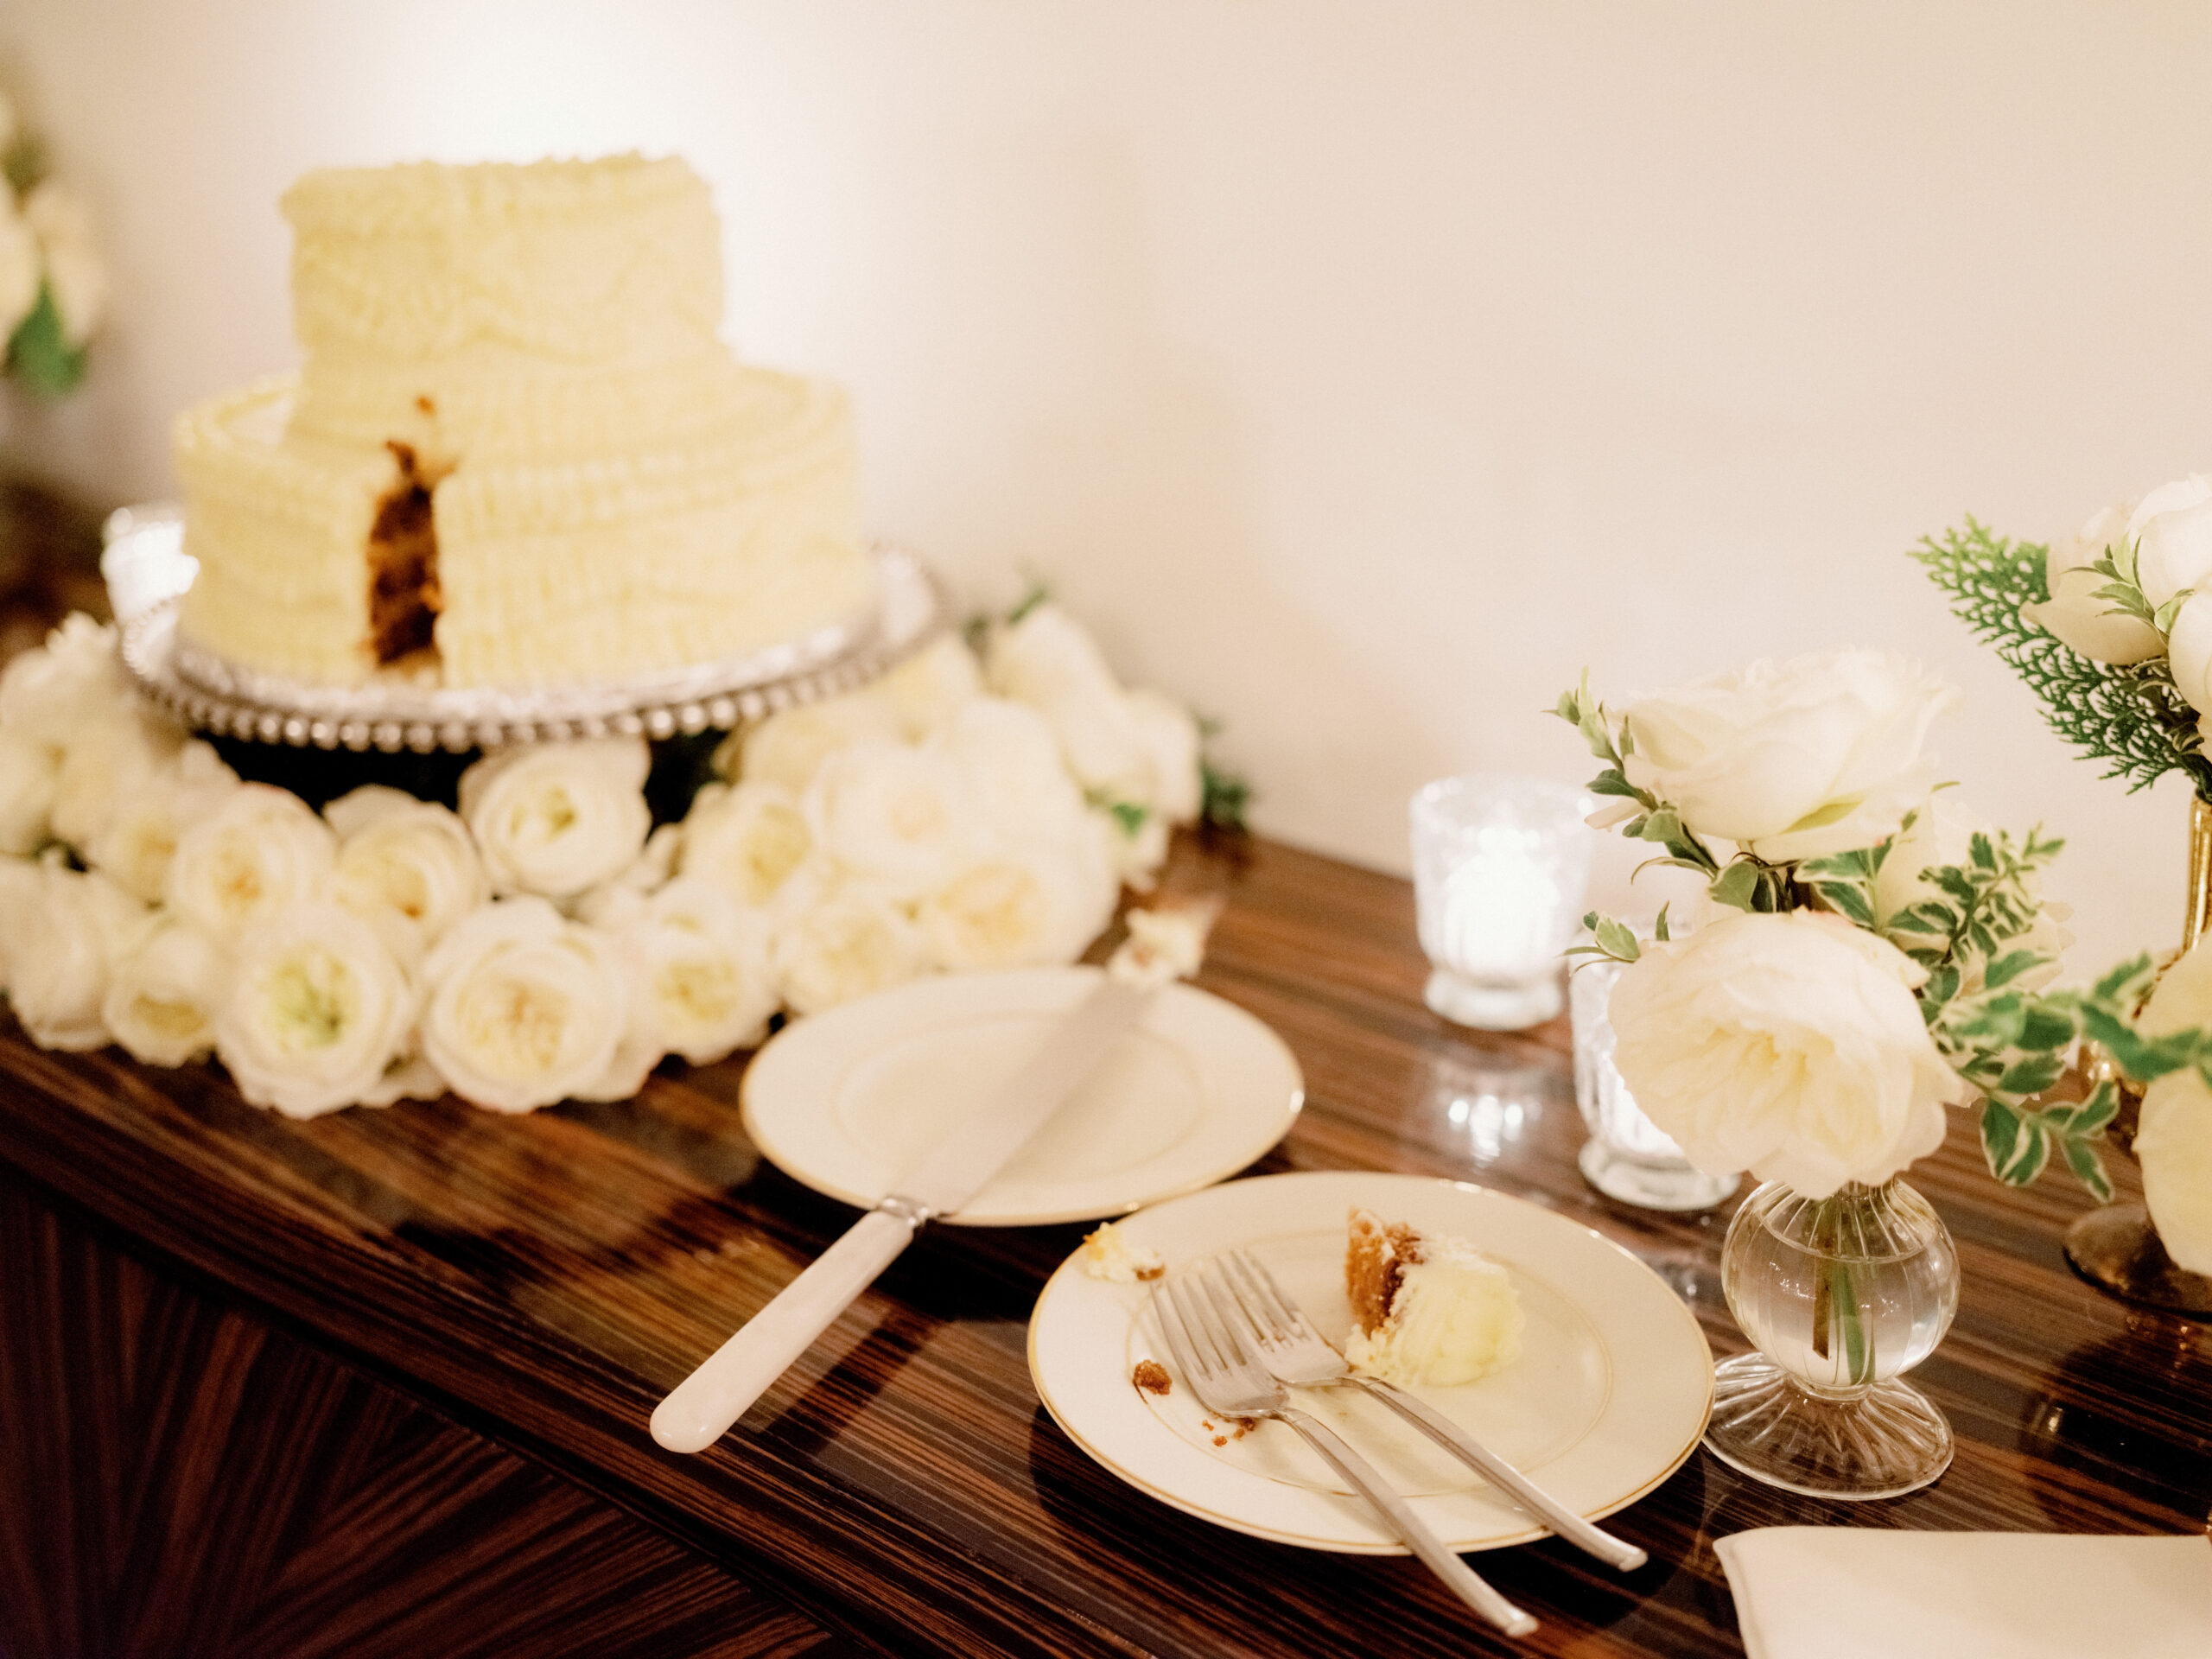 Editorial image of the wedding cake. Image by Jenny Fu Studio